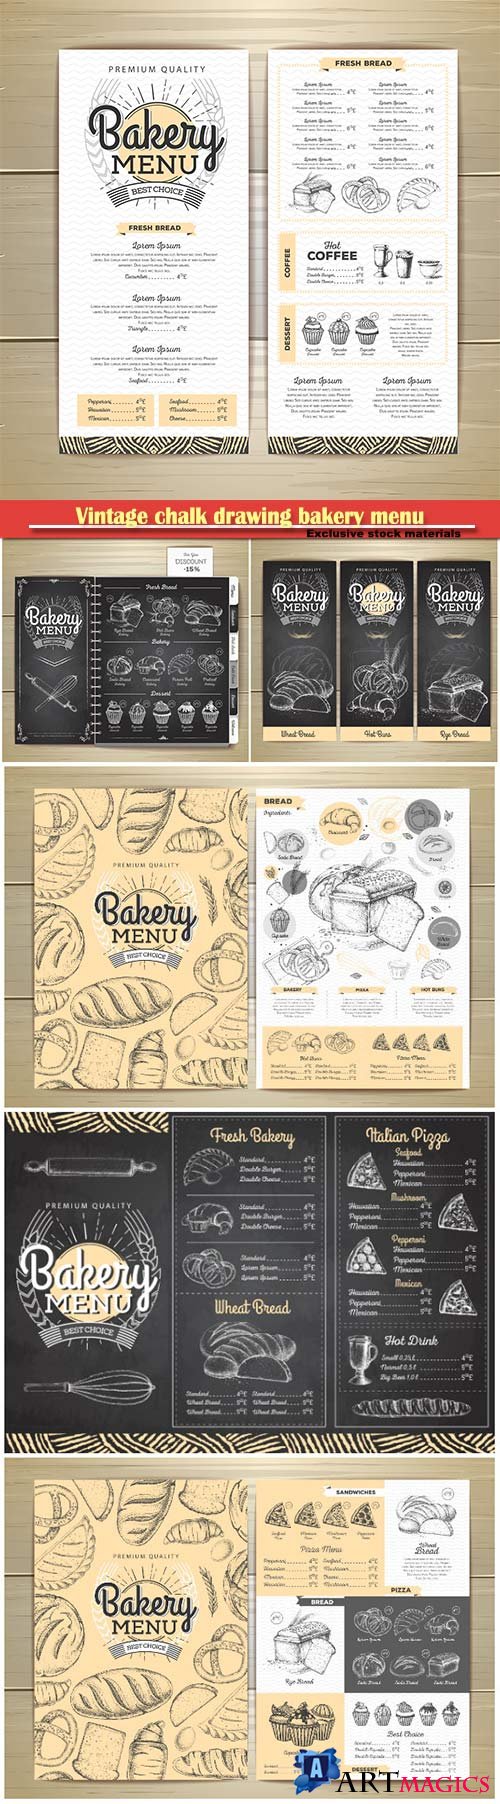 Vintage chalk drawing bakery menu design, restaurant menu